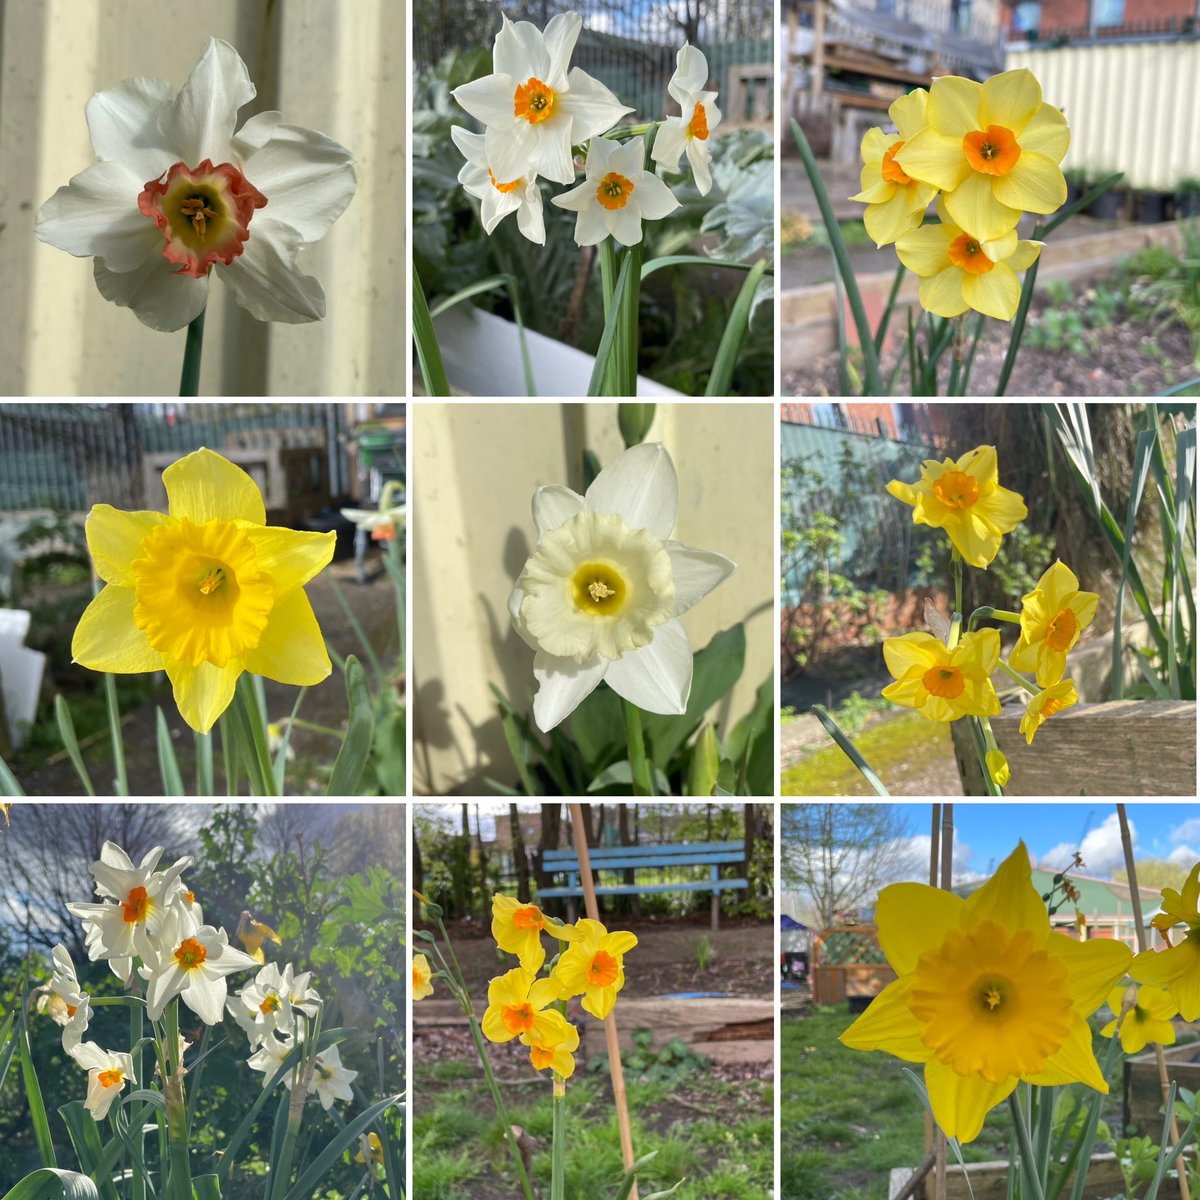 The many faces of Living Under One Sun daffodils! #daffodils #narcissus #spring #communitygarden #community #downlanepark #n17 #tottenham #tottenhamhale